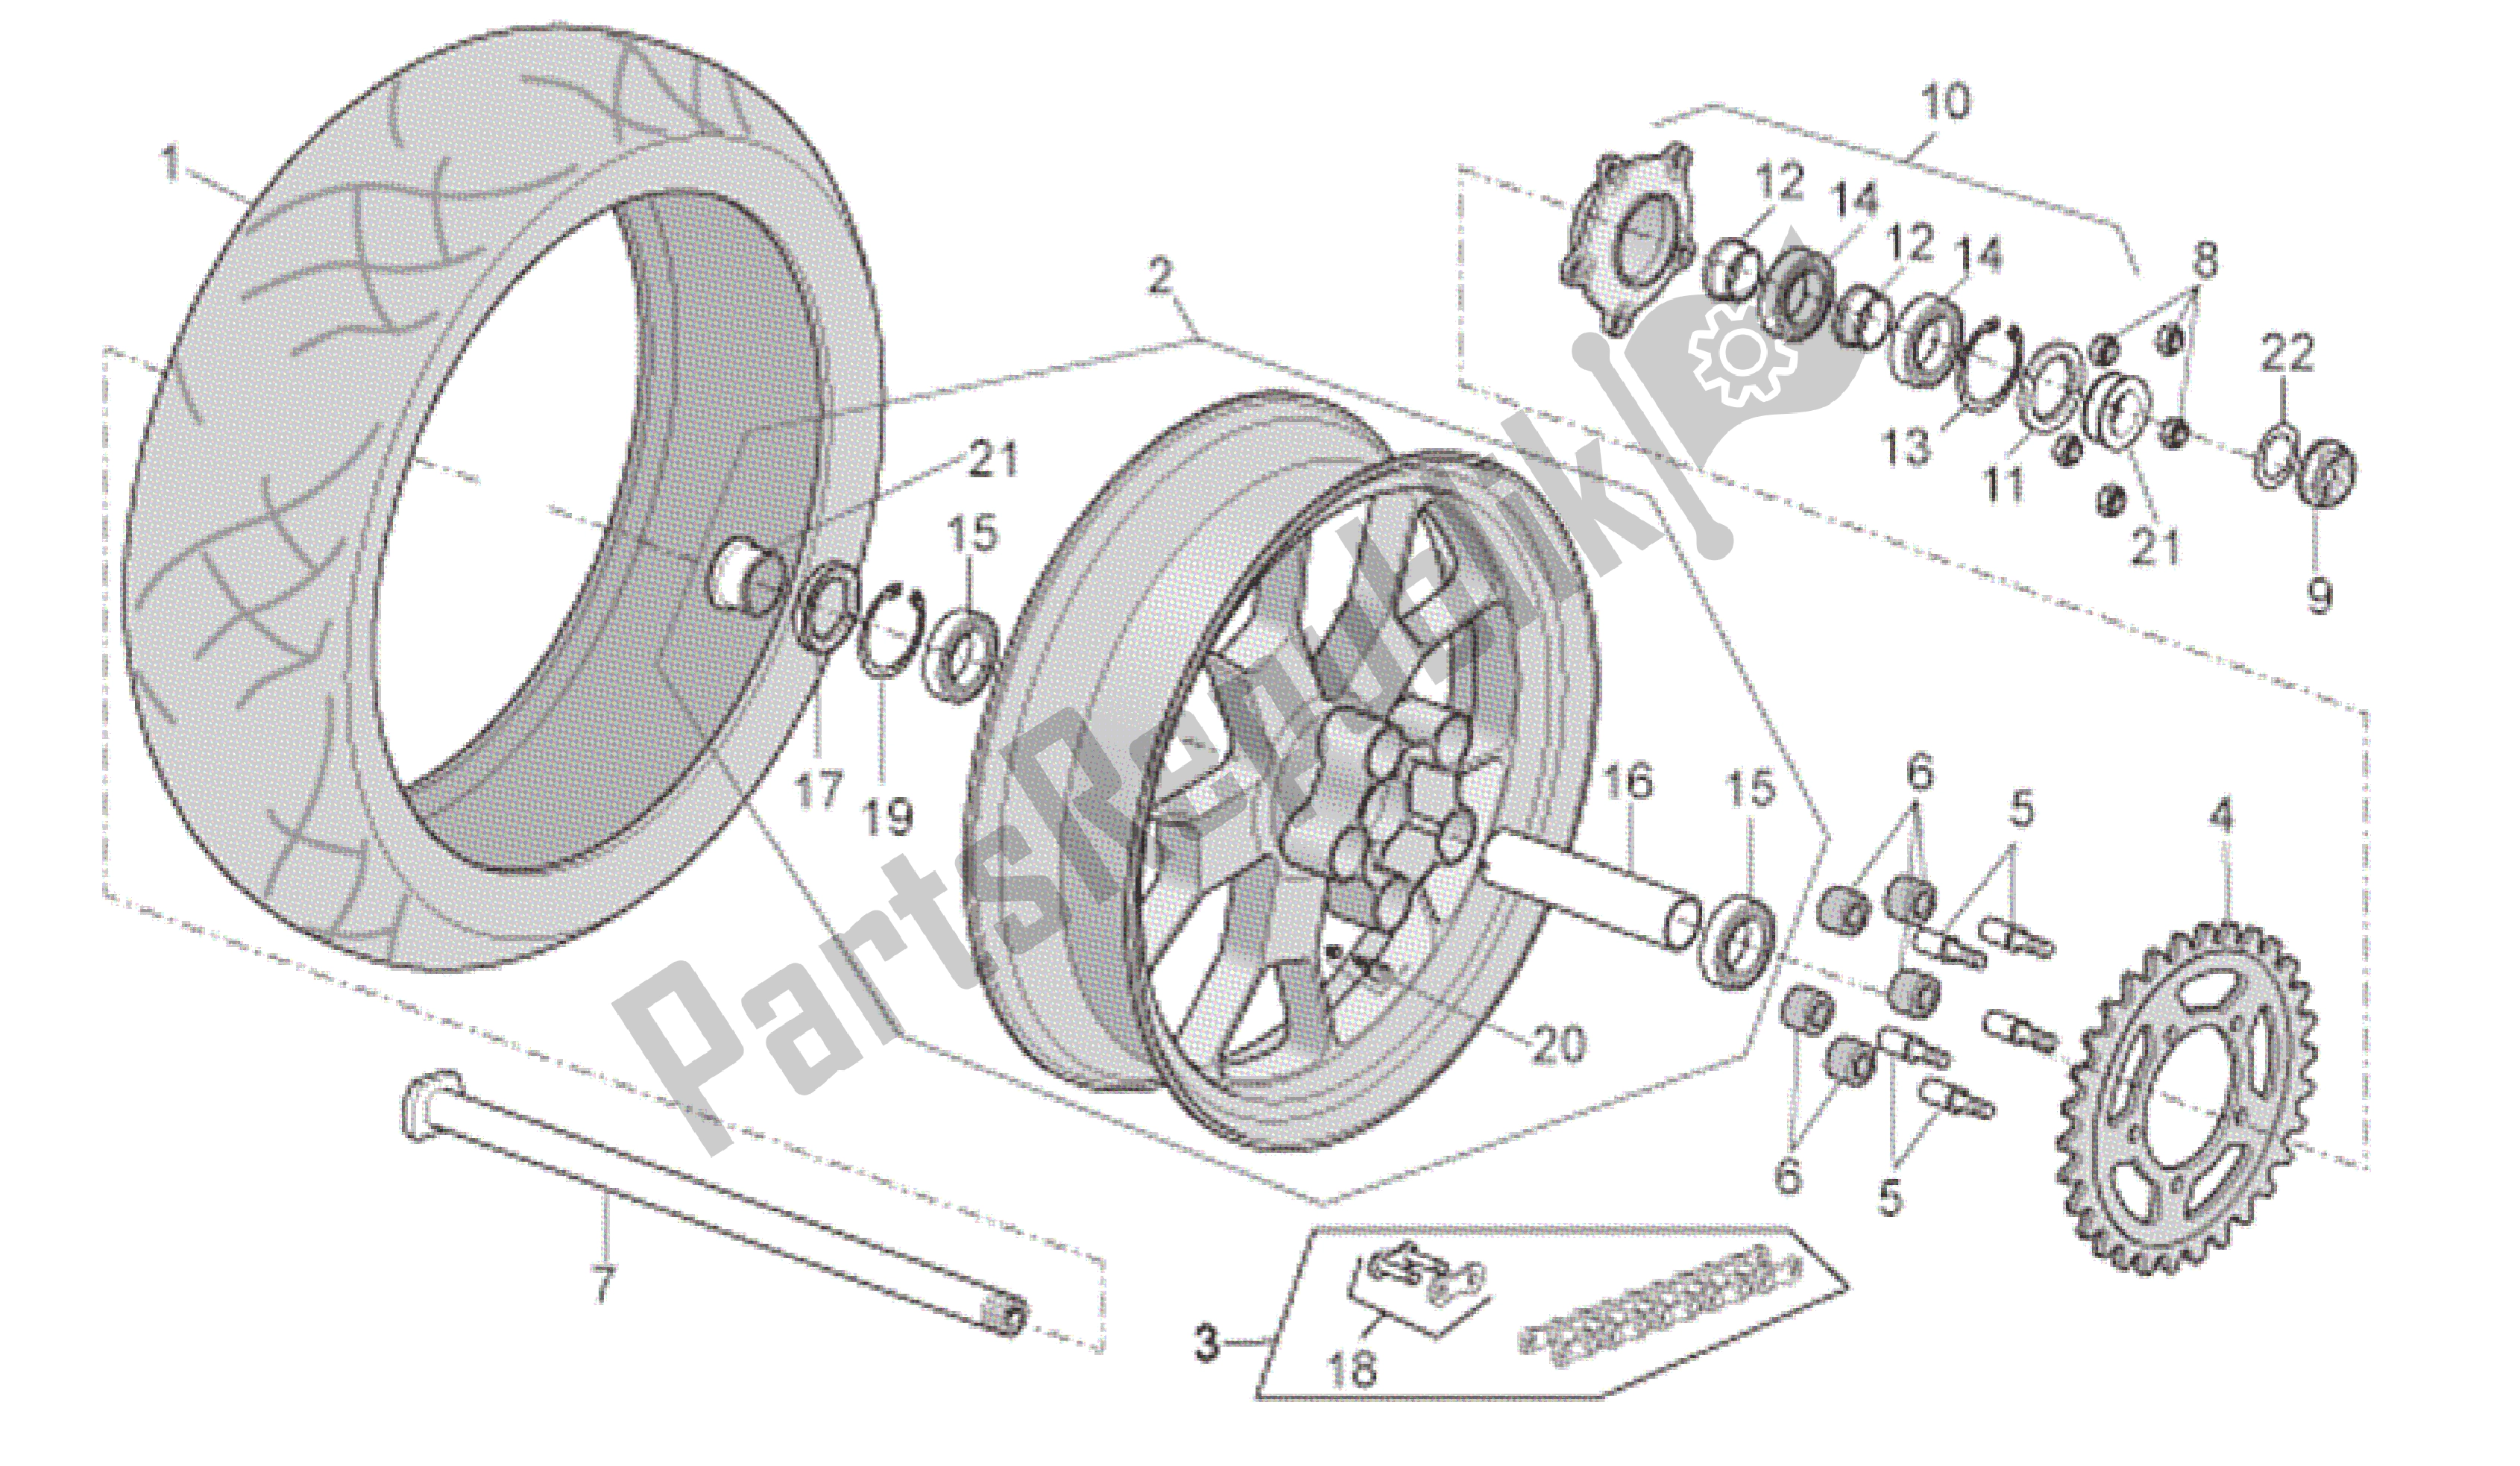 All parts for the Rear Wheel Factory of the Aprilia RSV Tuono R 3985 1000 2006 - 2009